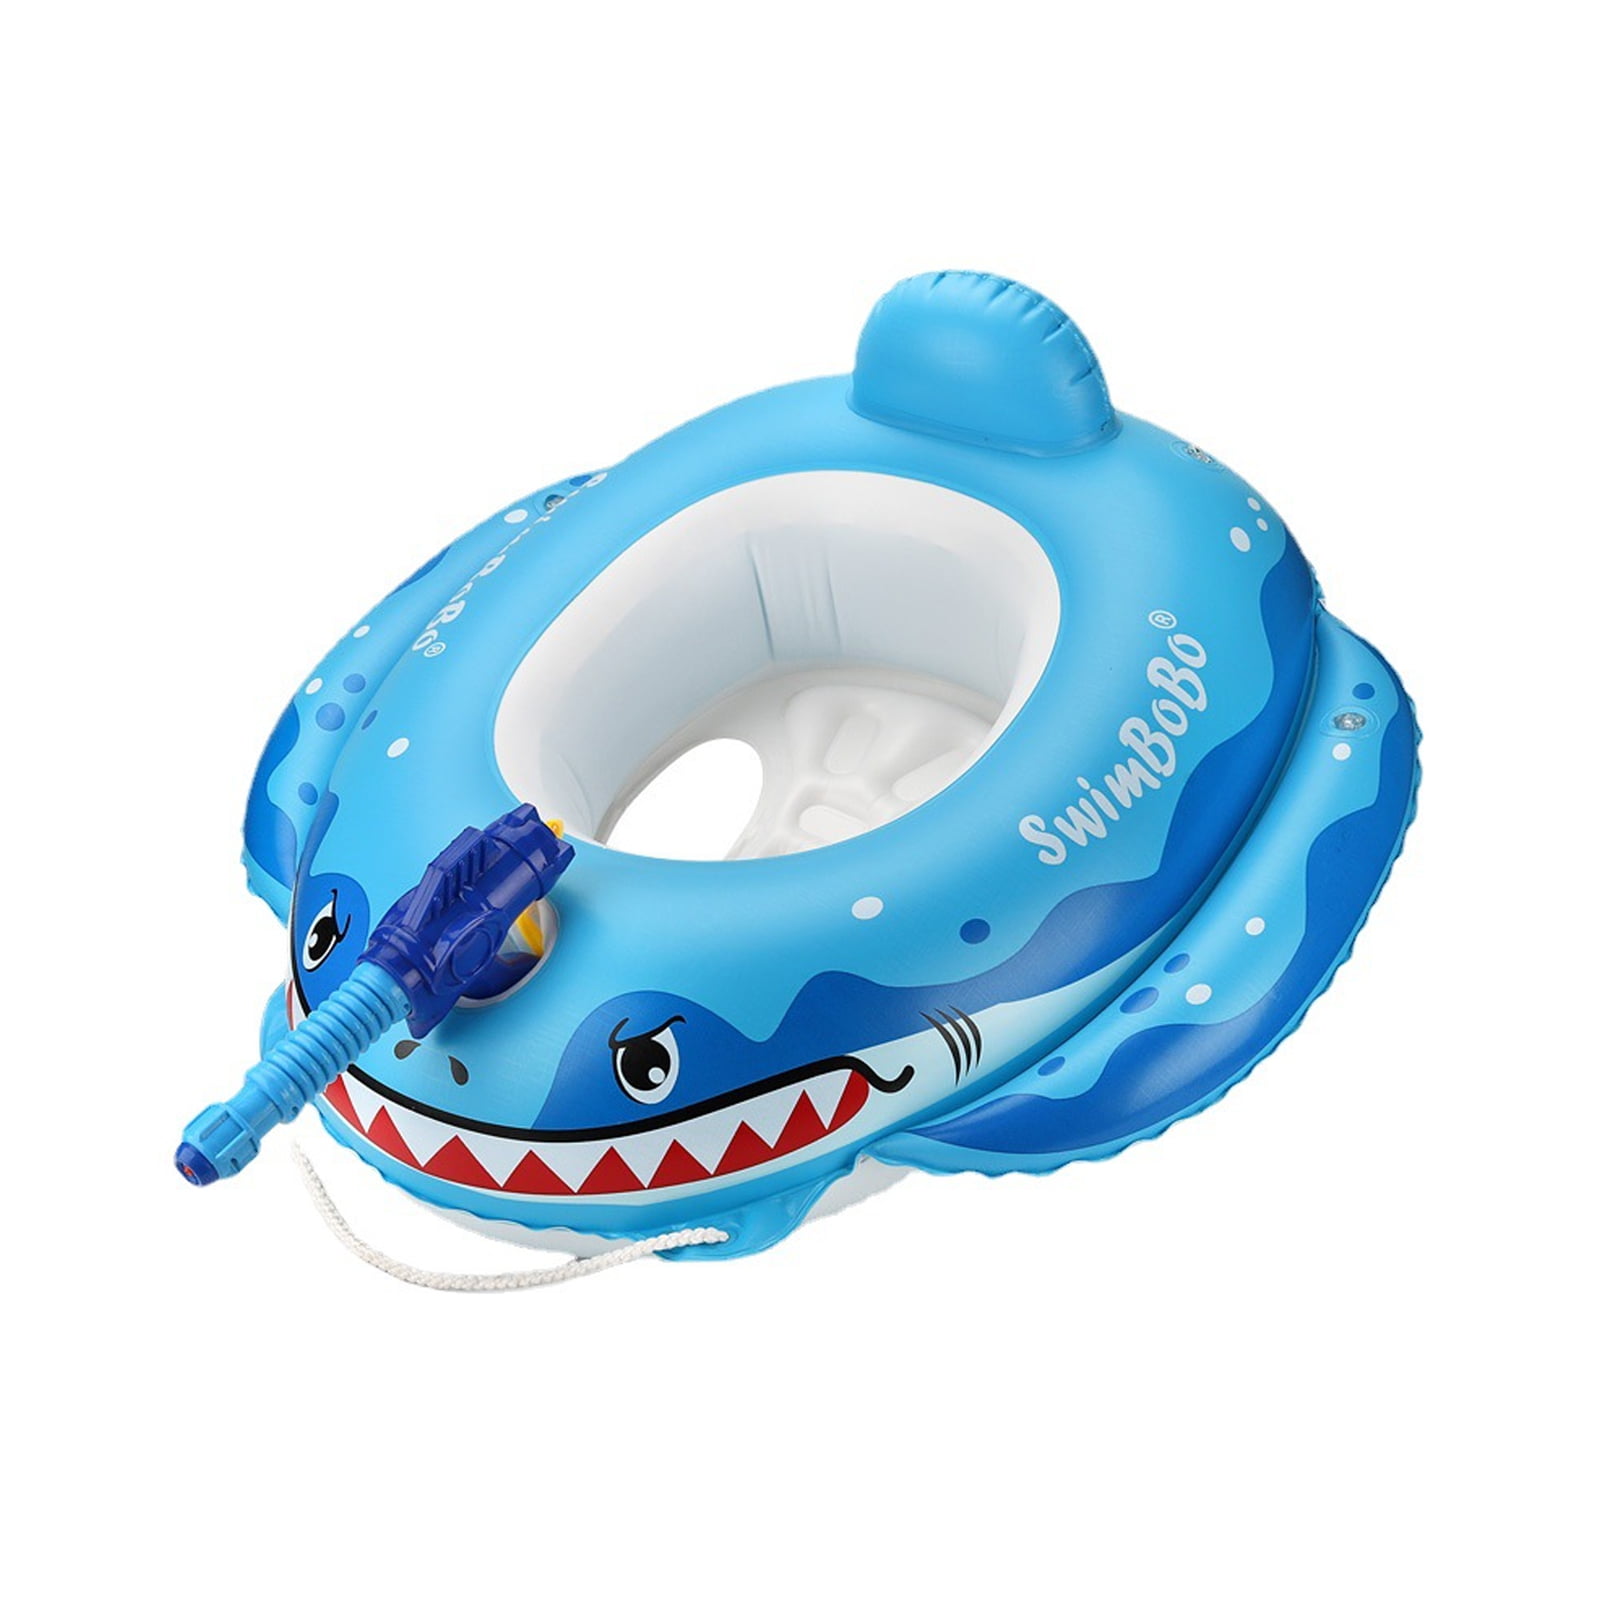 Rory Racing Car beach ball & Swim Ring Inflatable Swimming aid set. 